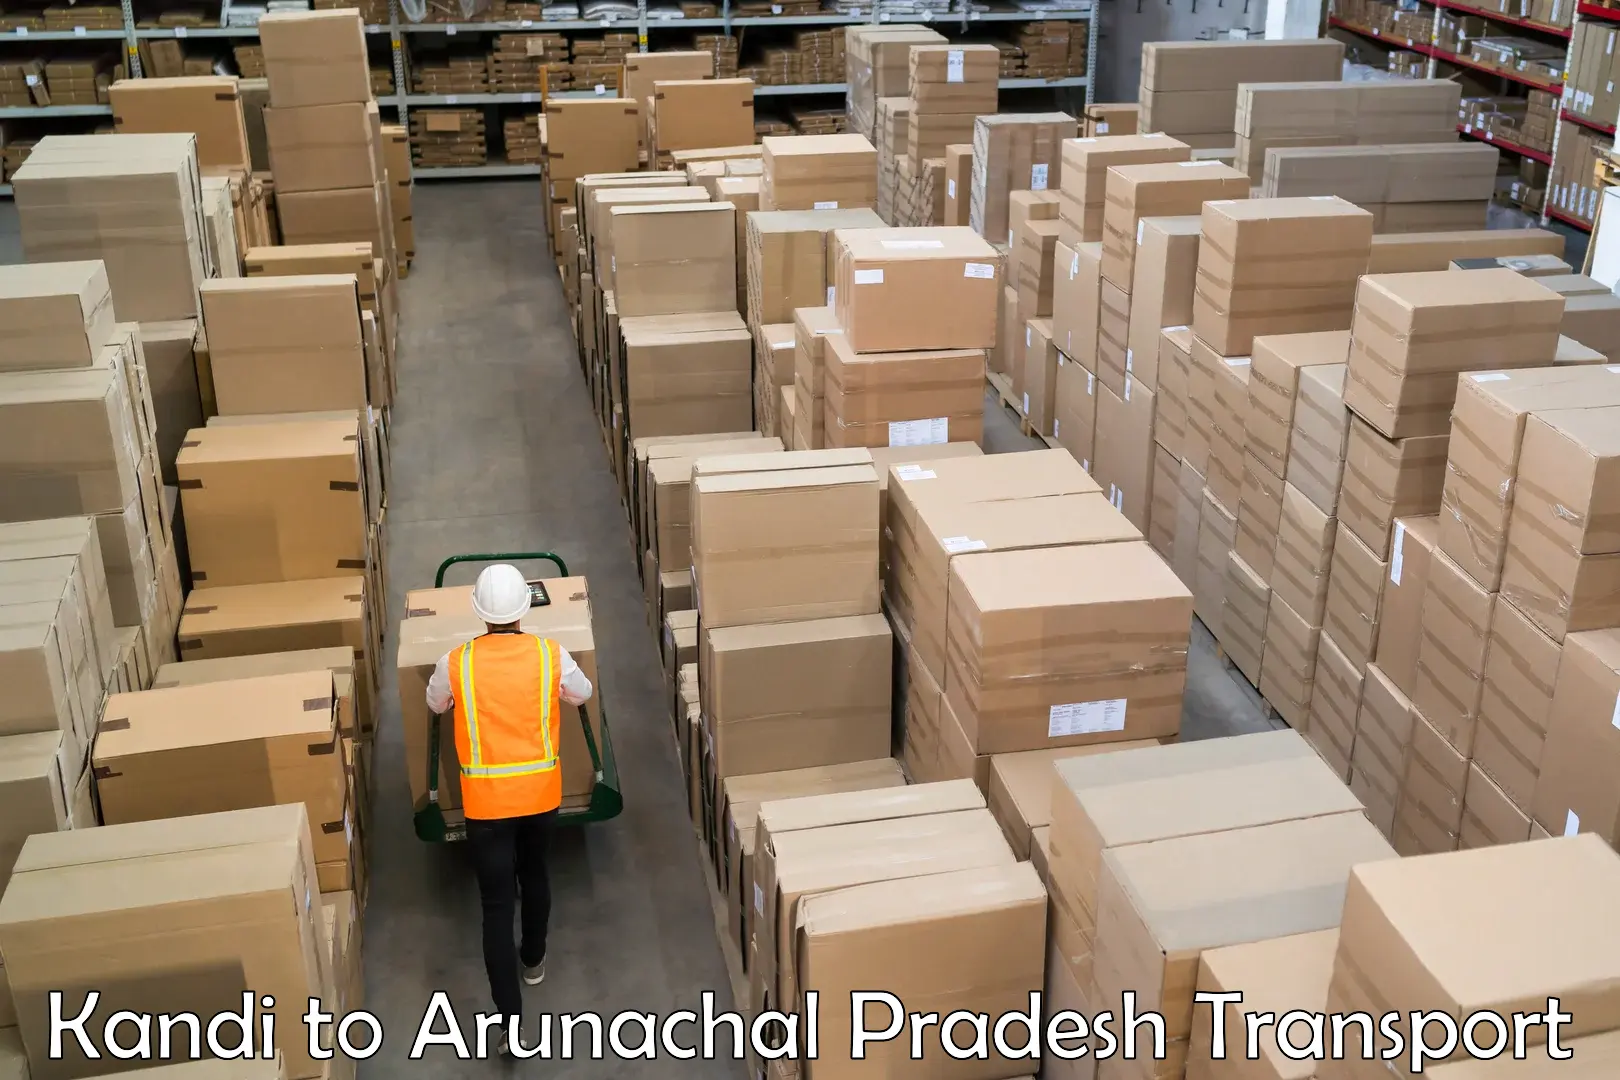 Delivery service Kandi to Arunachal Pradesh